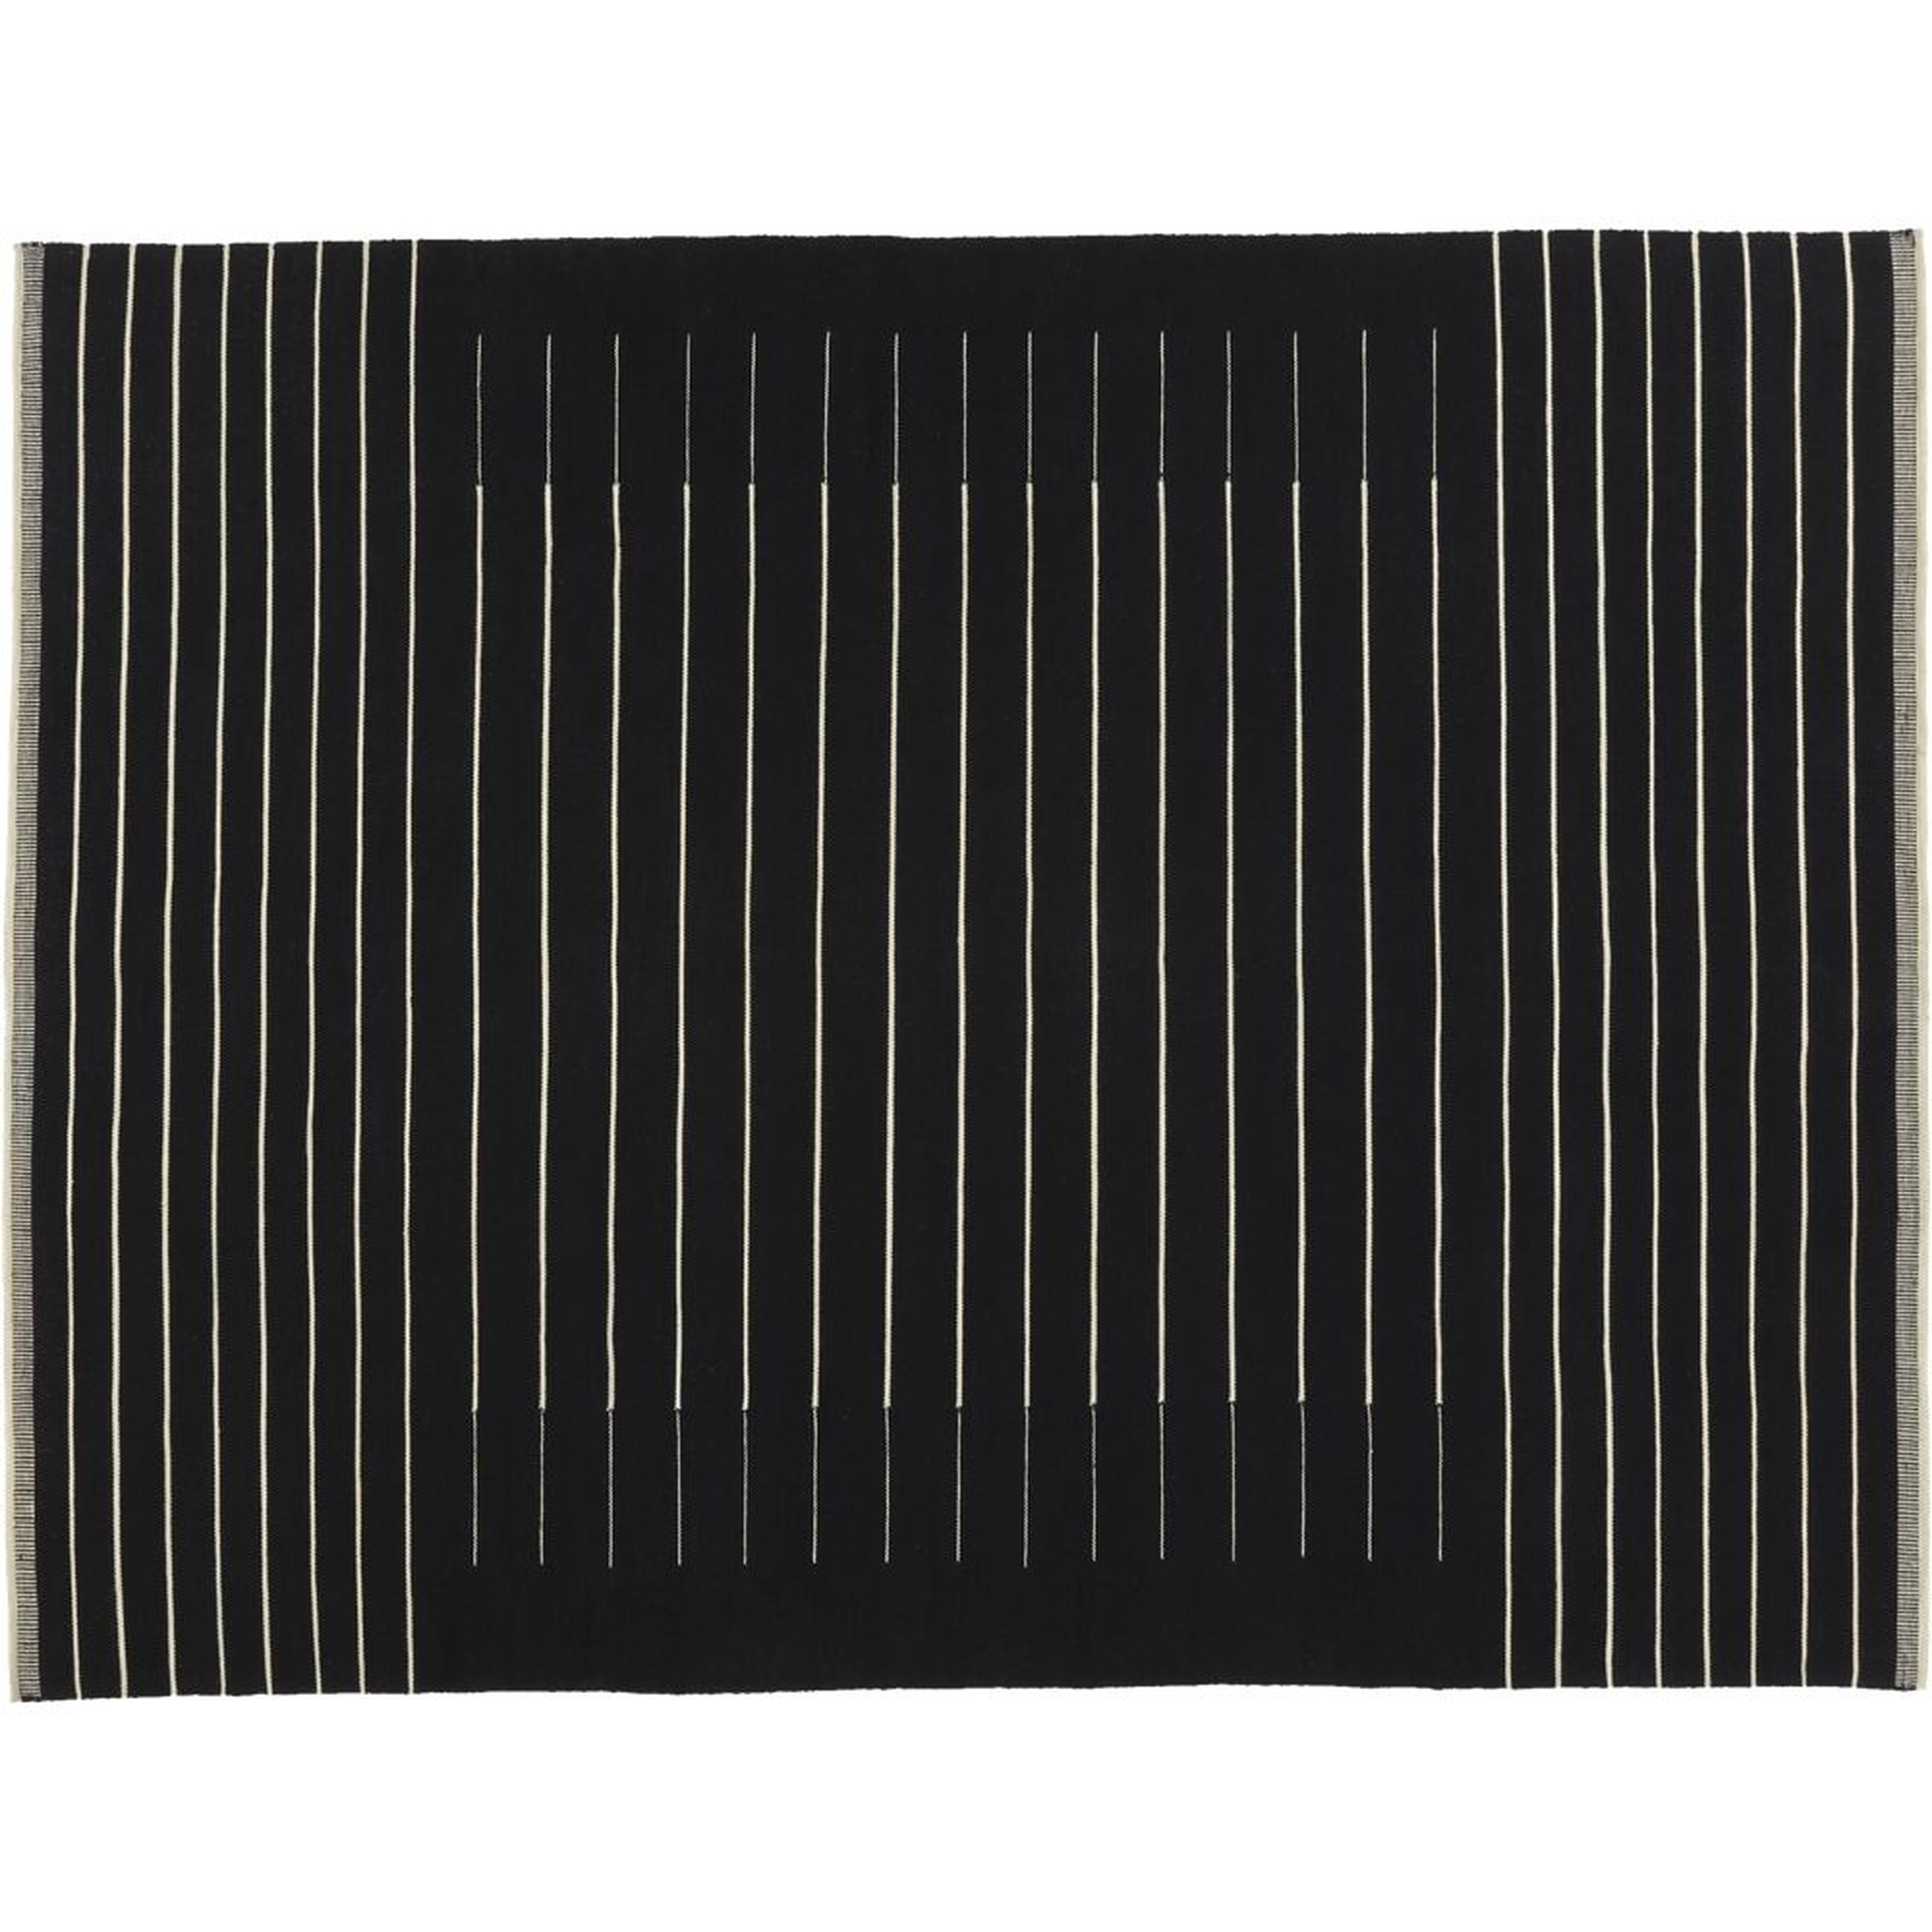 black with white stripe rug 9'x12' - CB2